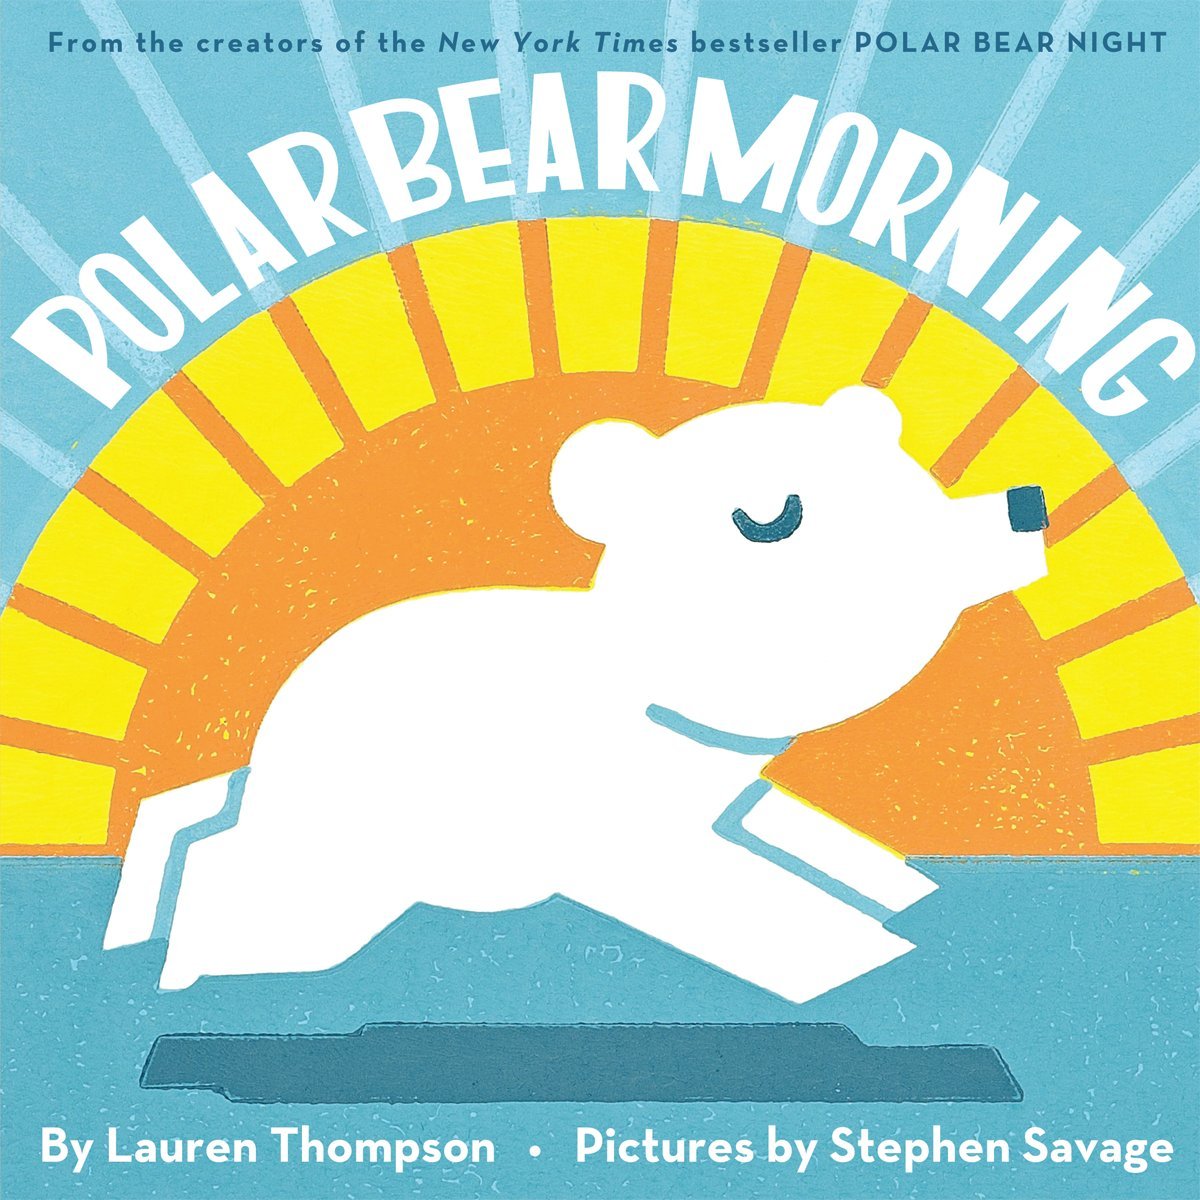 Polar Bear Morning